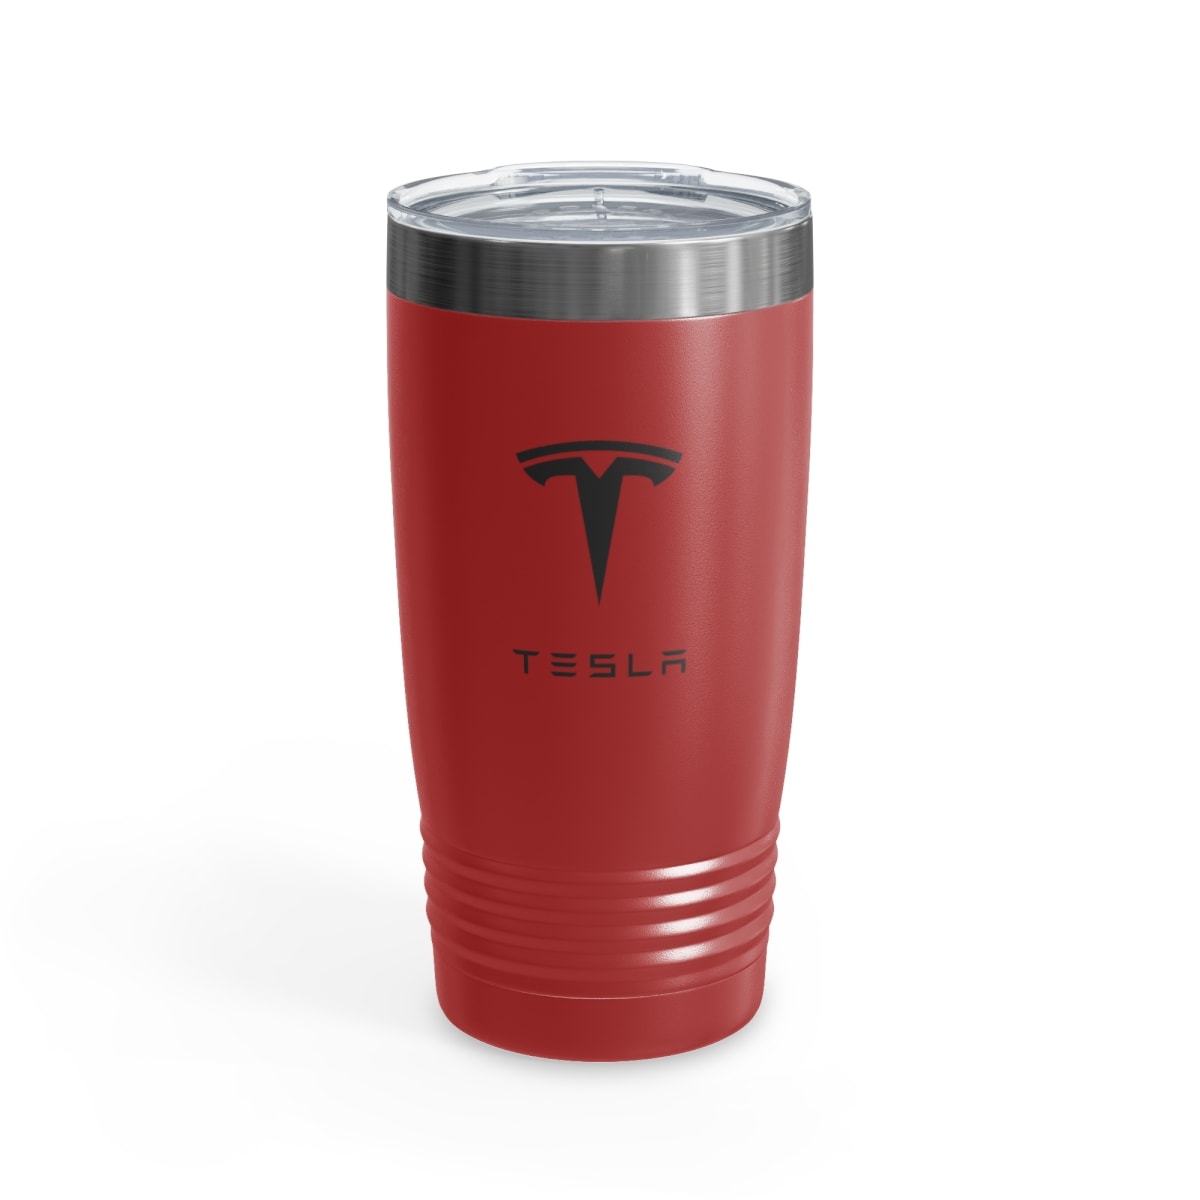 https://www.merchhunters.com/wp-content/uploads/2022/11/tesla-logo-20oz-tumbler-mug-1.jpg